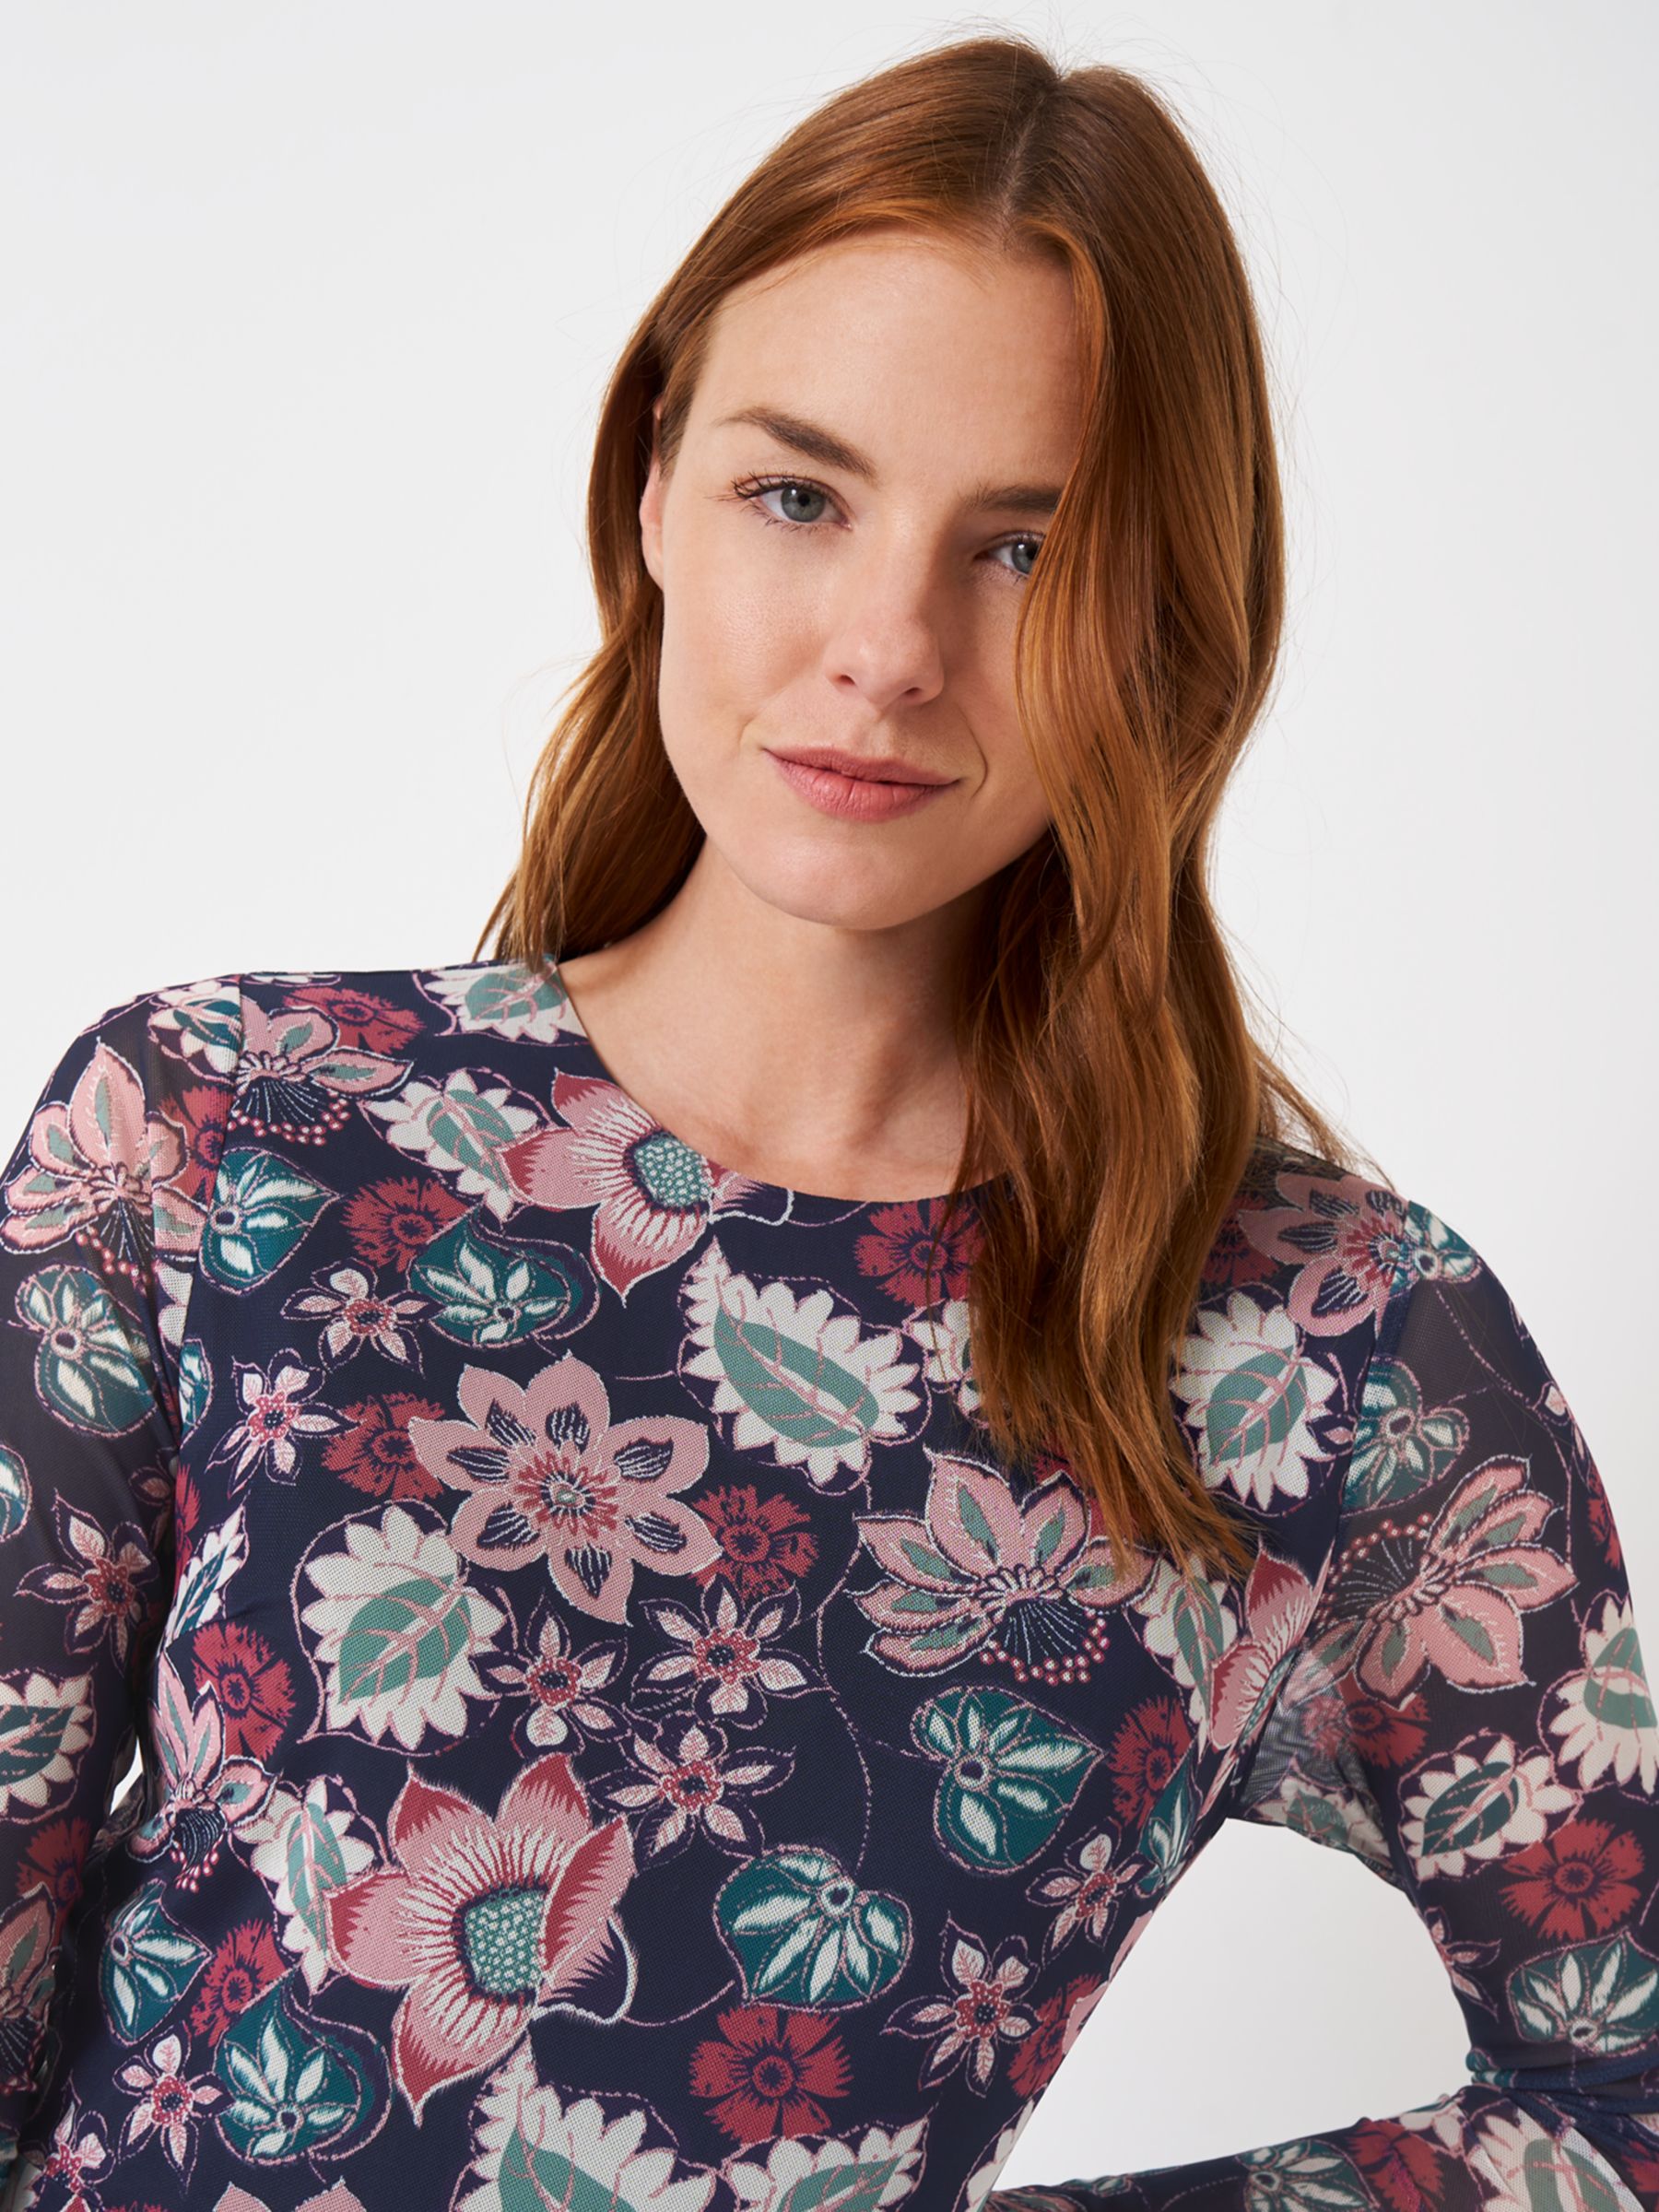 Buy Crew Clothing Alma Floral Print Midi Dress, Navy/Multi Online at johnlewis.com